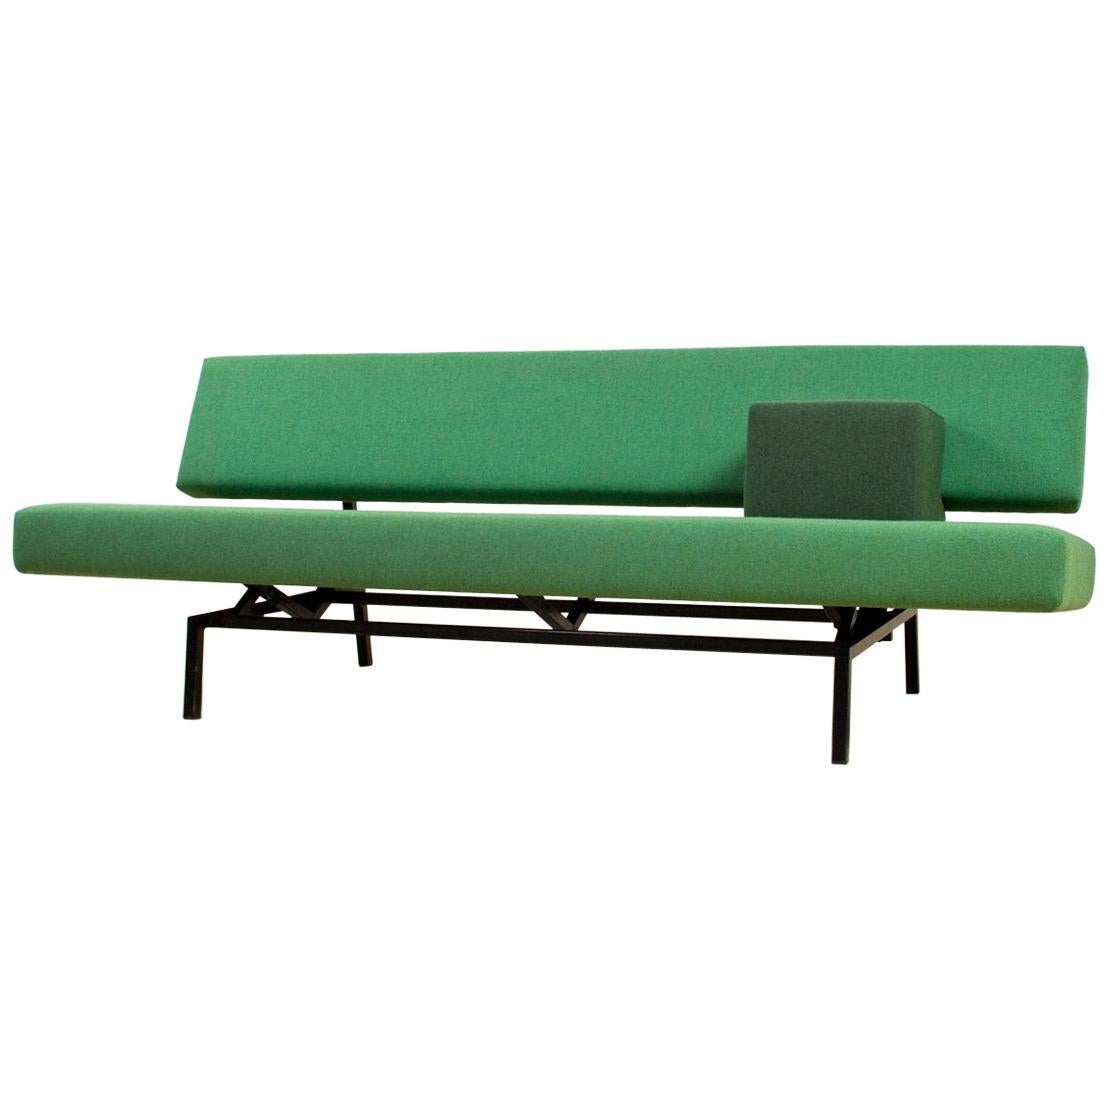 Mid-Century Modern Sofa Daybed in Forest Green by Martin Visser, Spectrum, 1960s